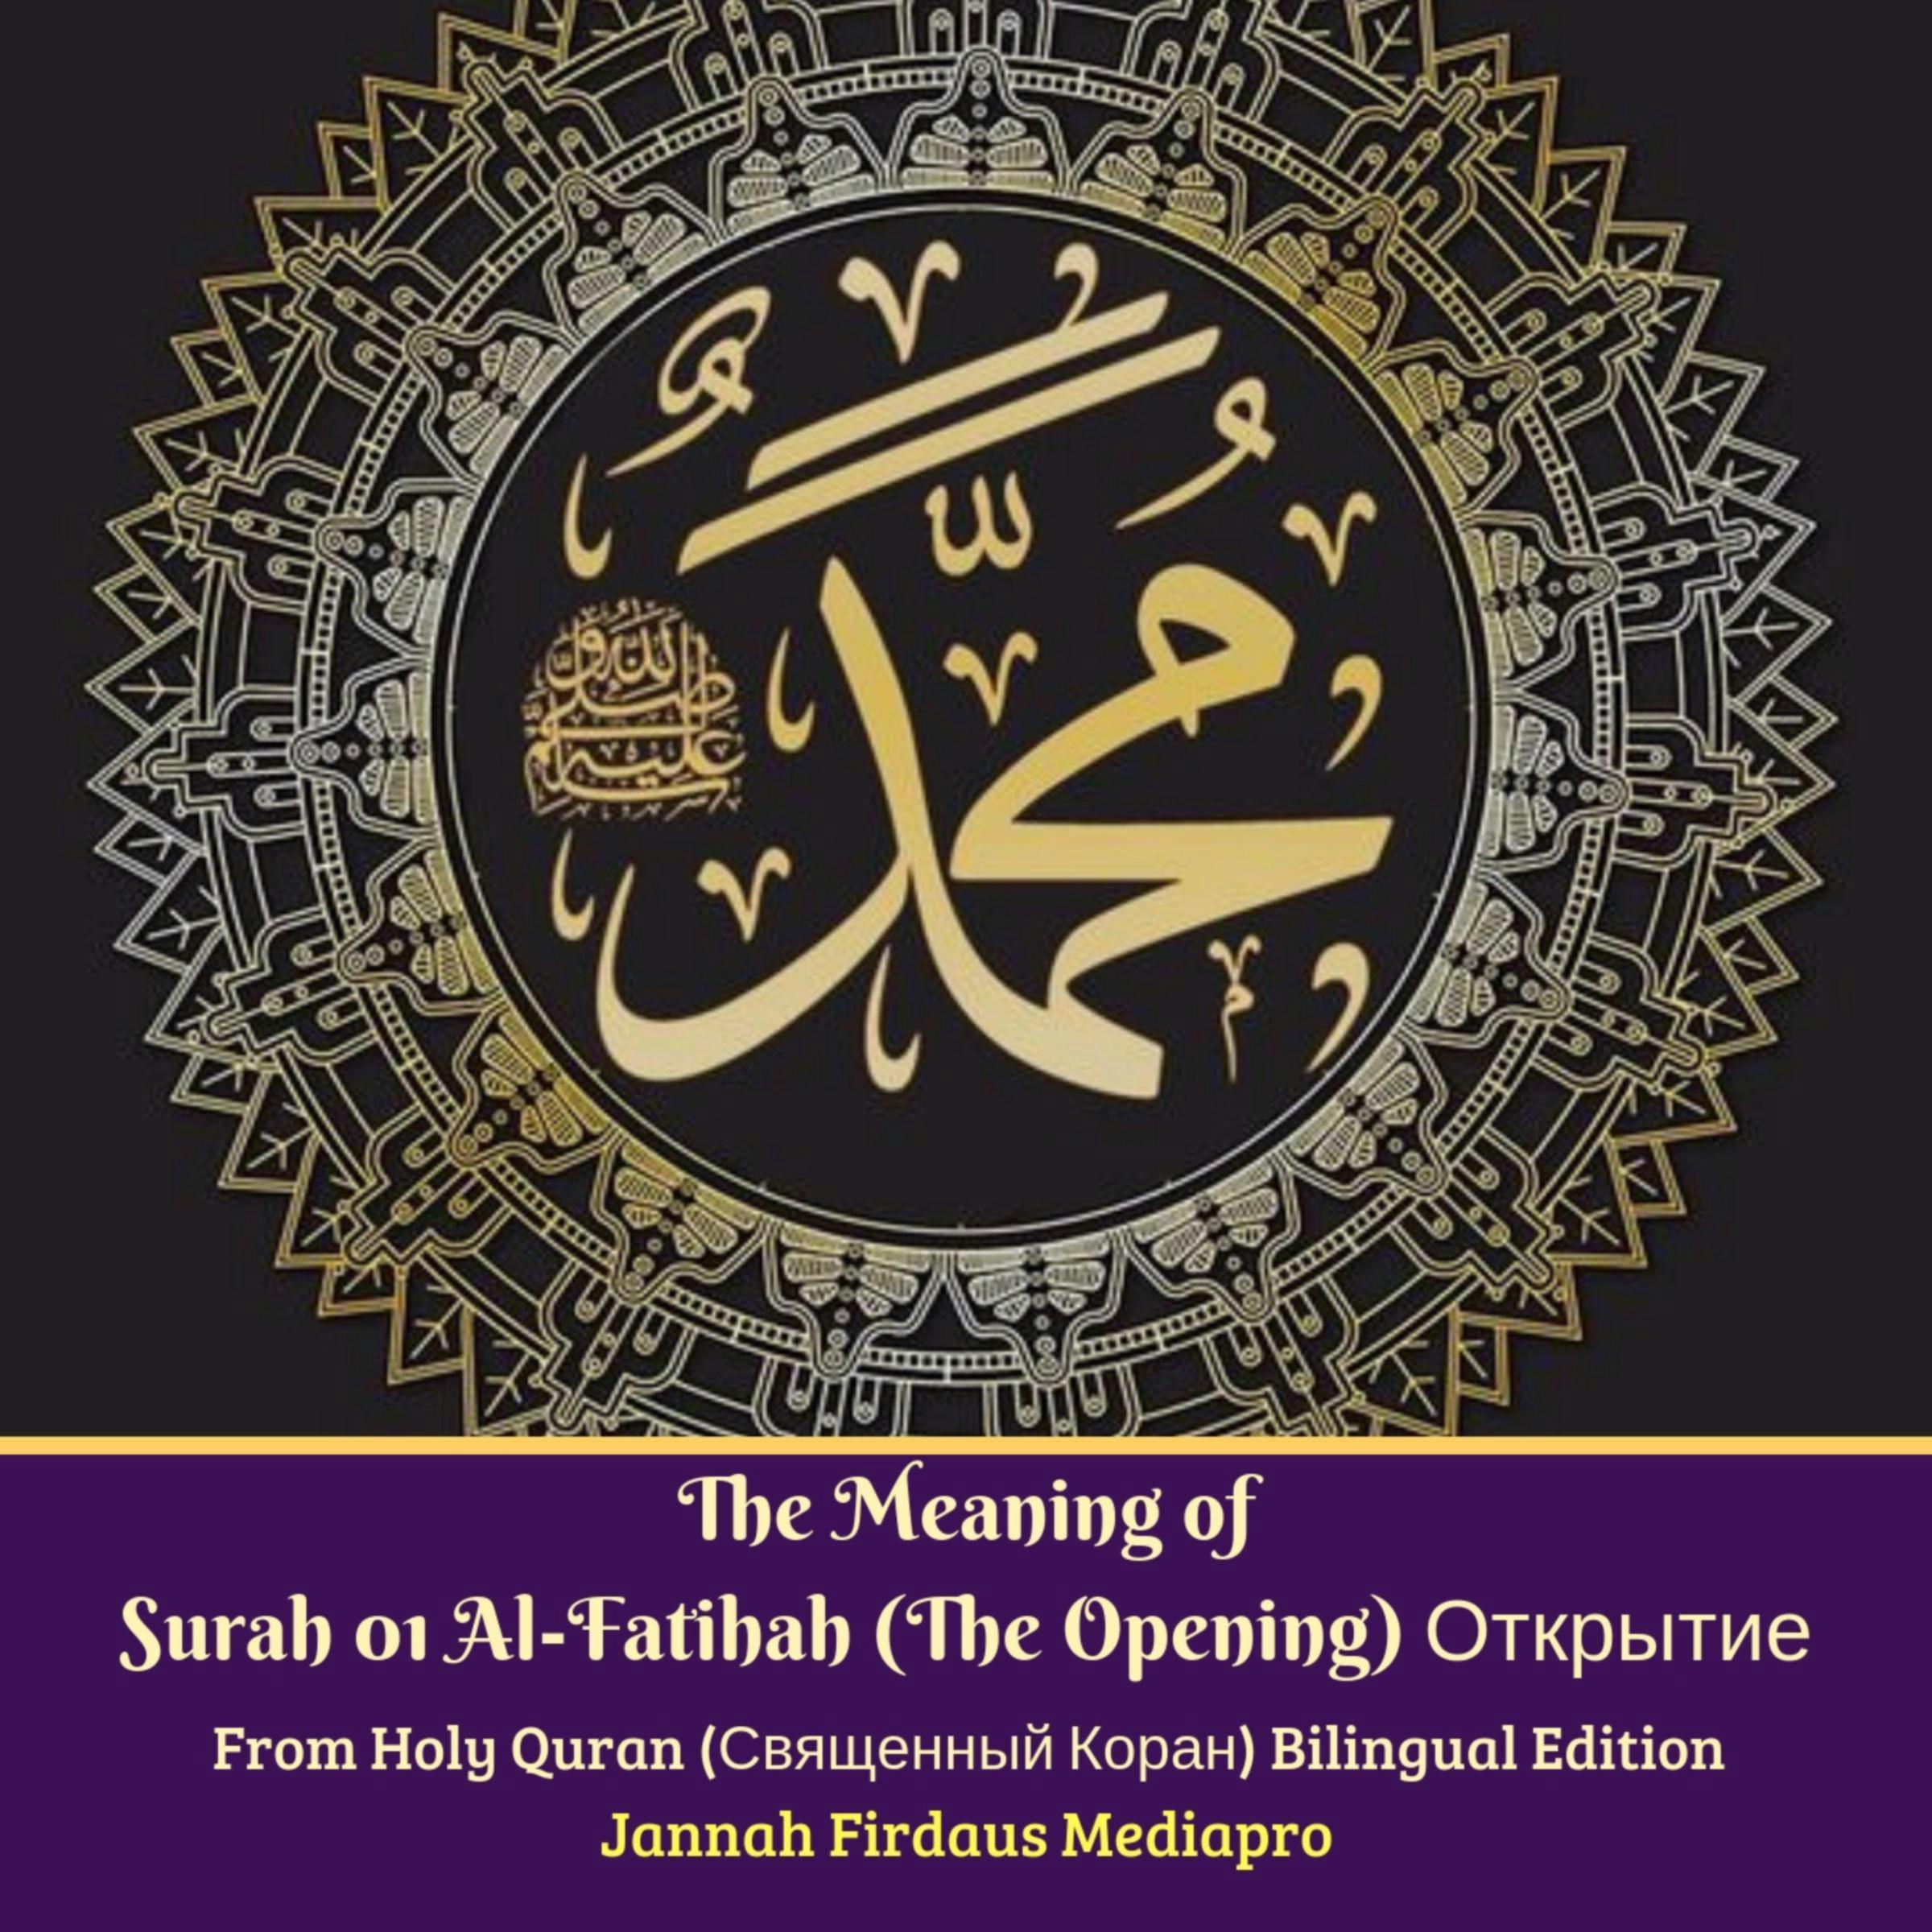 The Meaning of Surah 01 Al-Fatihah (The Opening) - Jannah Firdaus Mediapro